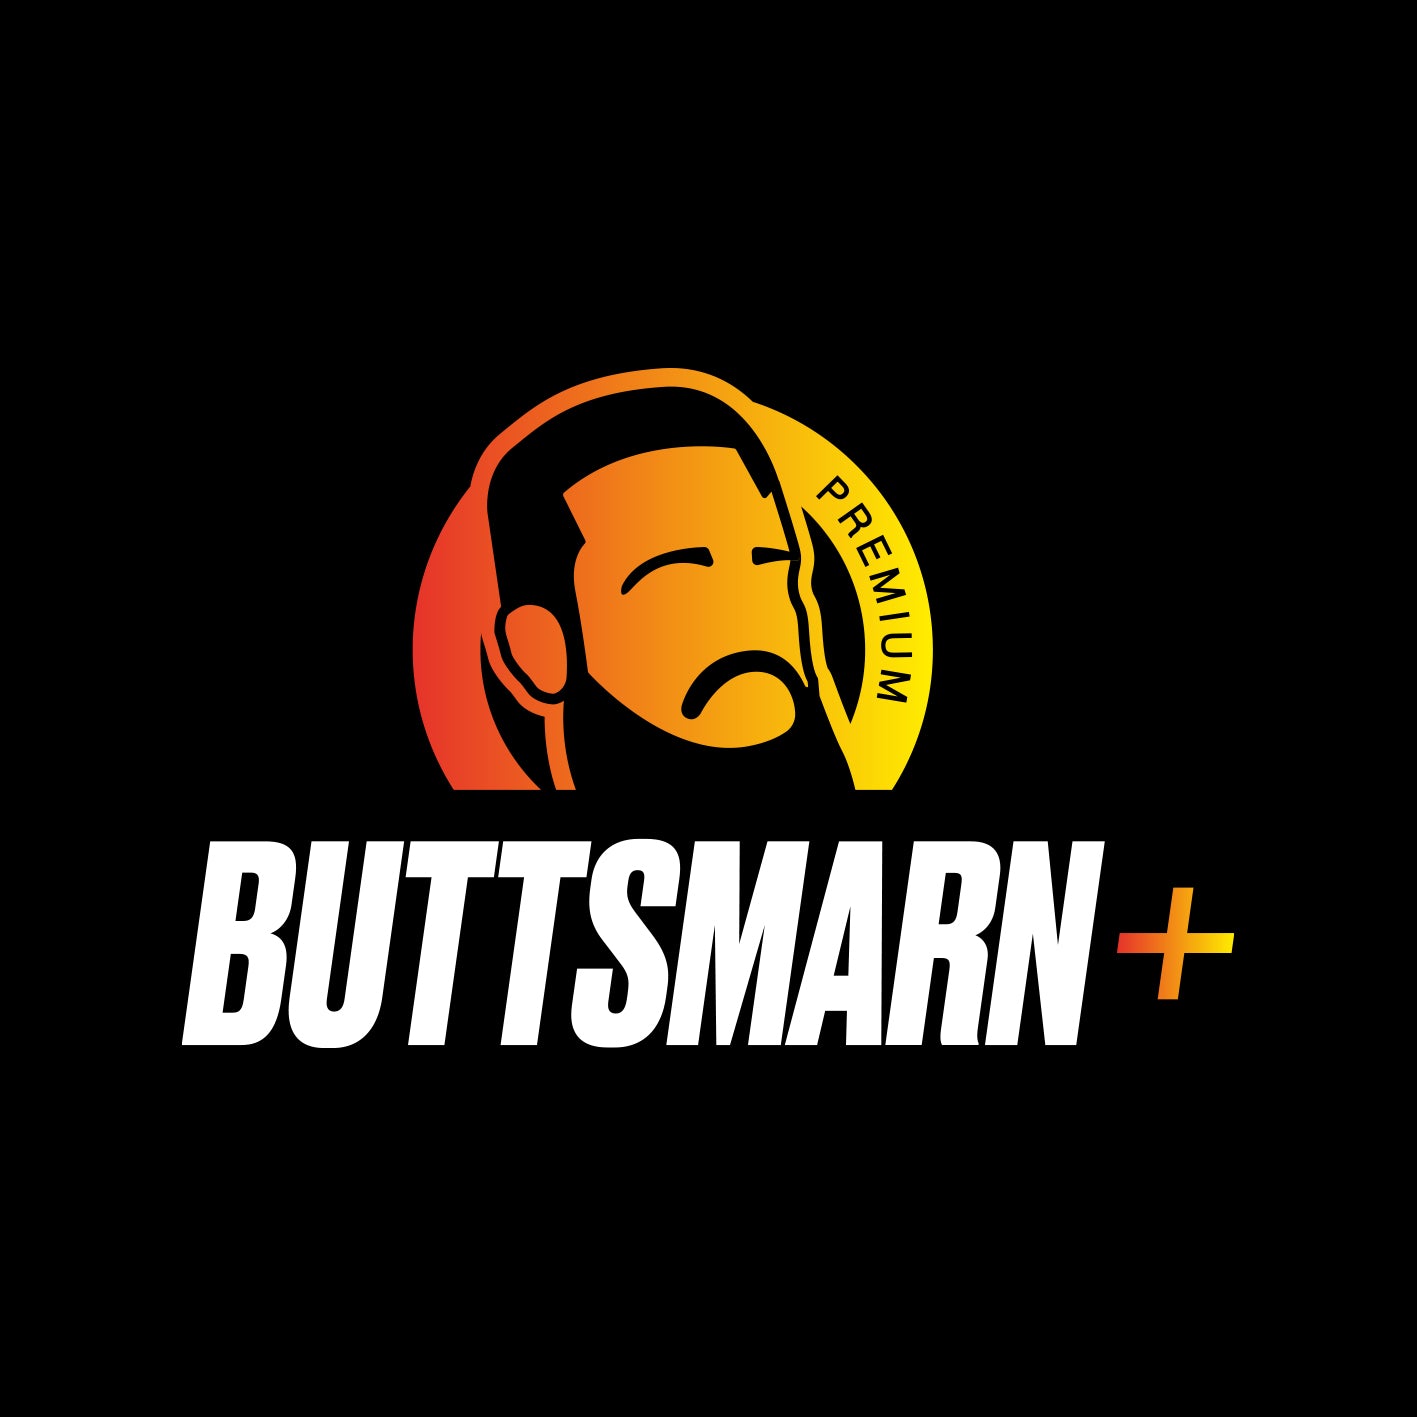 Buttsmarn Premium Exclusive